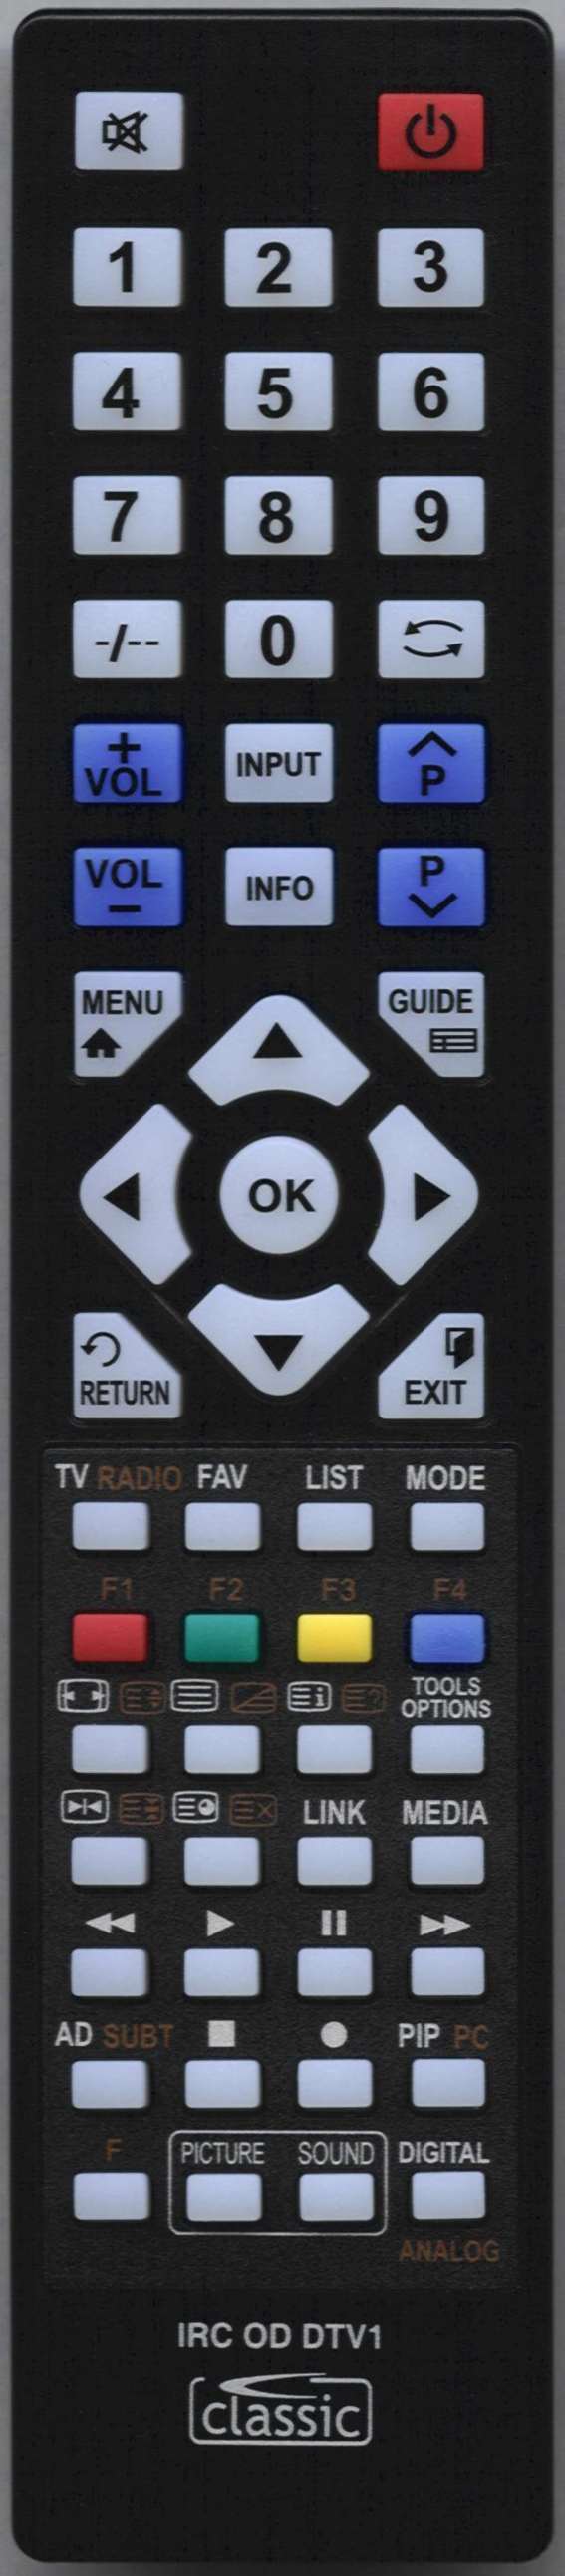 LG 43UF680V Remote Control Alternative